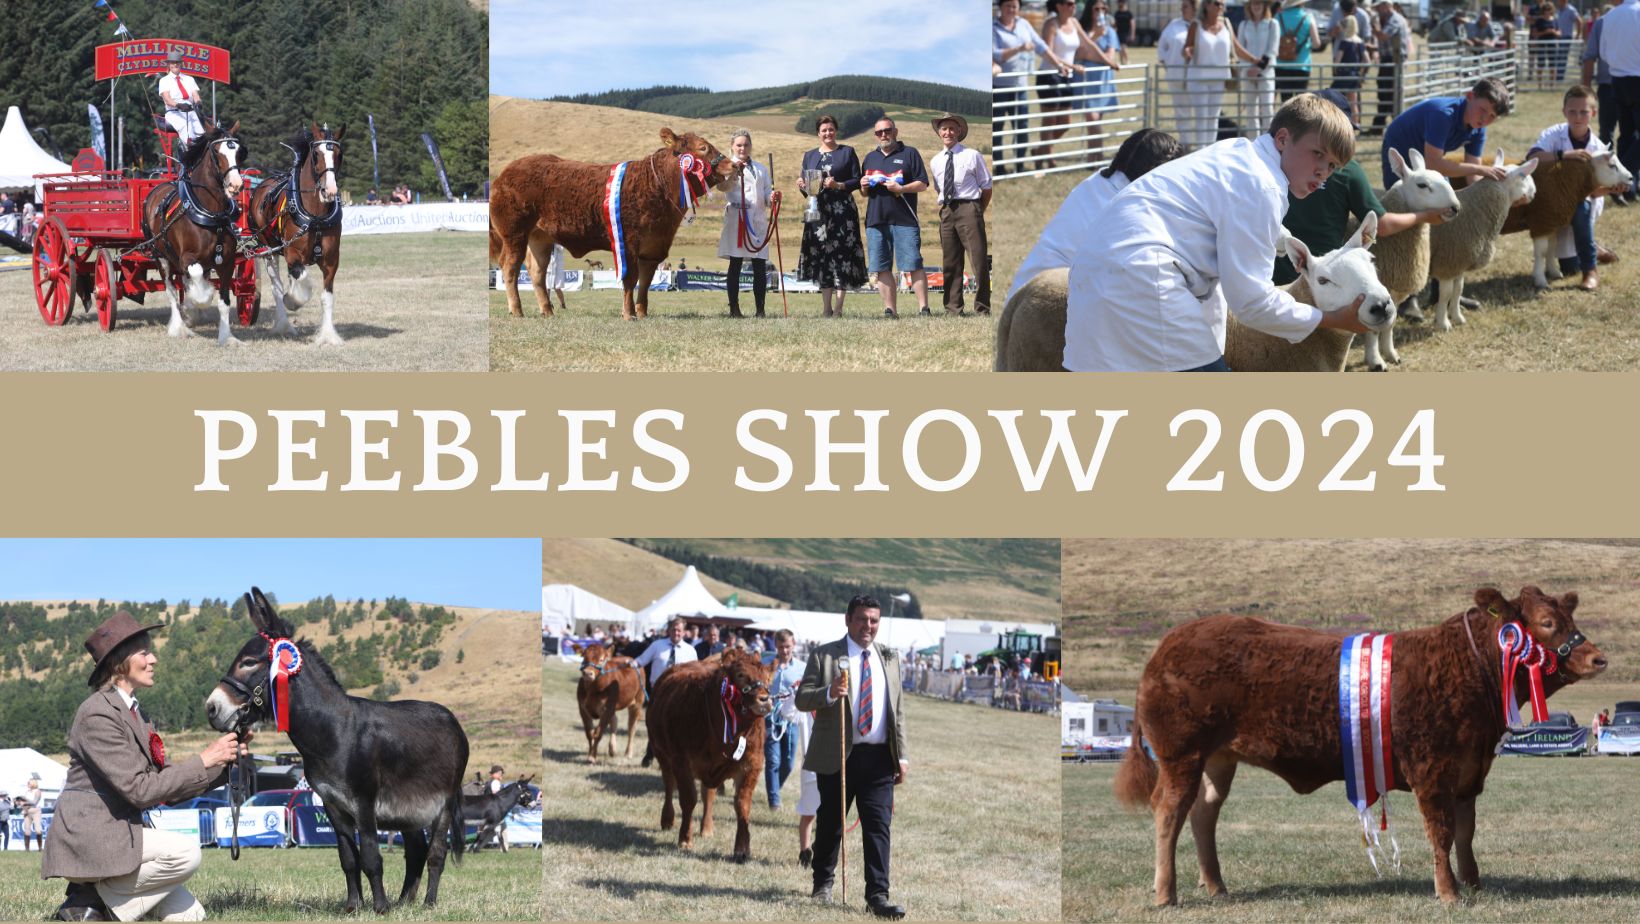 Peebles Show 2023